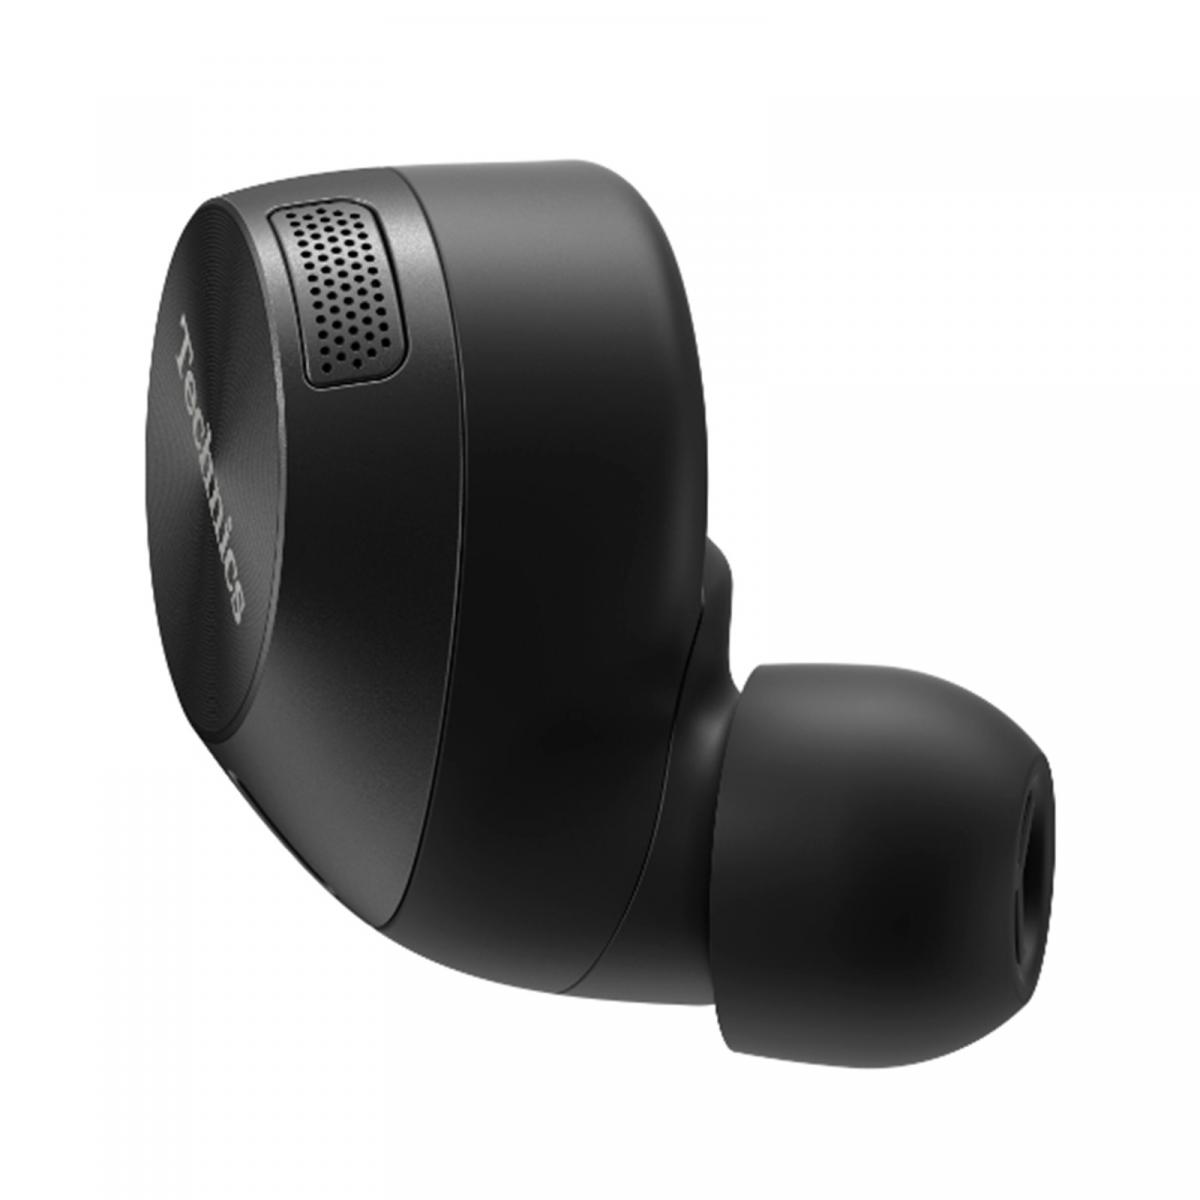 Technics | EAH-AZ60 M2 Noise Cancelling True Wireless Bluetooth